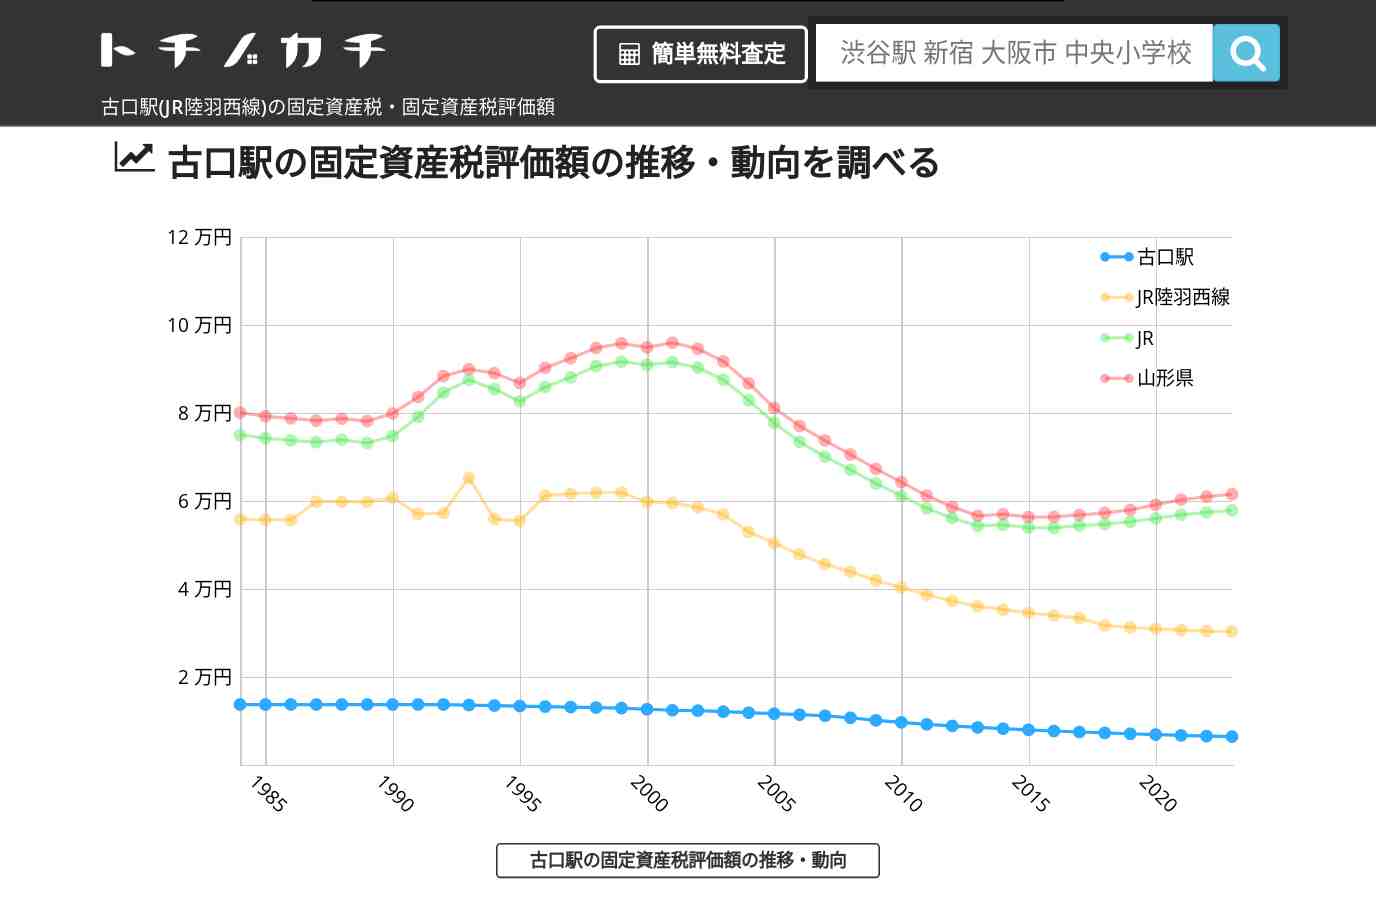 古口駅(JR陸羽西線)の固定資産税・固定資産税評価額 | トチノカチ